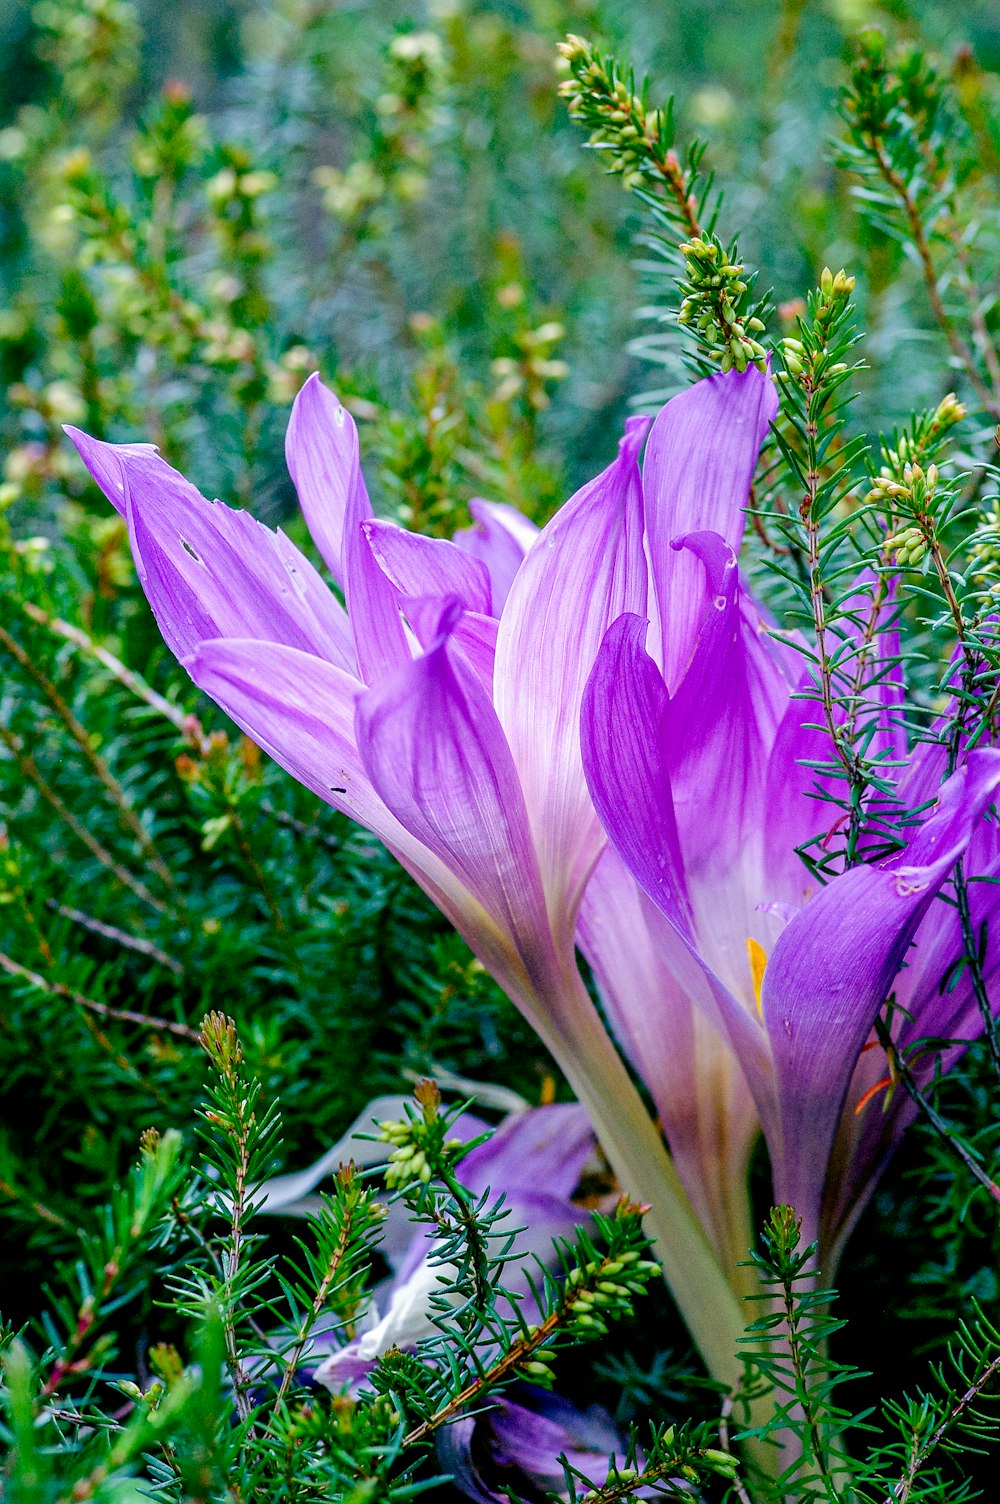 purple crocus in bloom during daytime